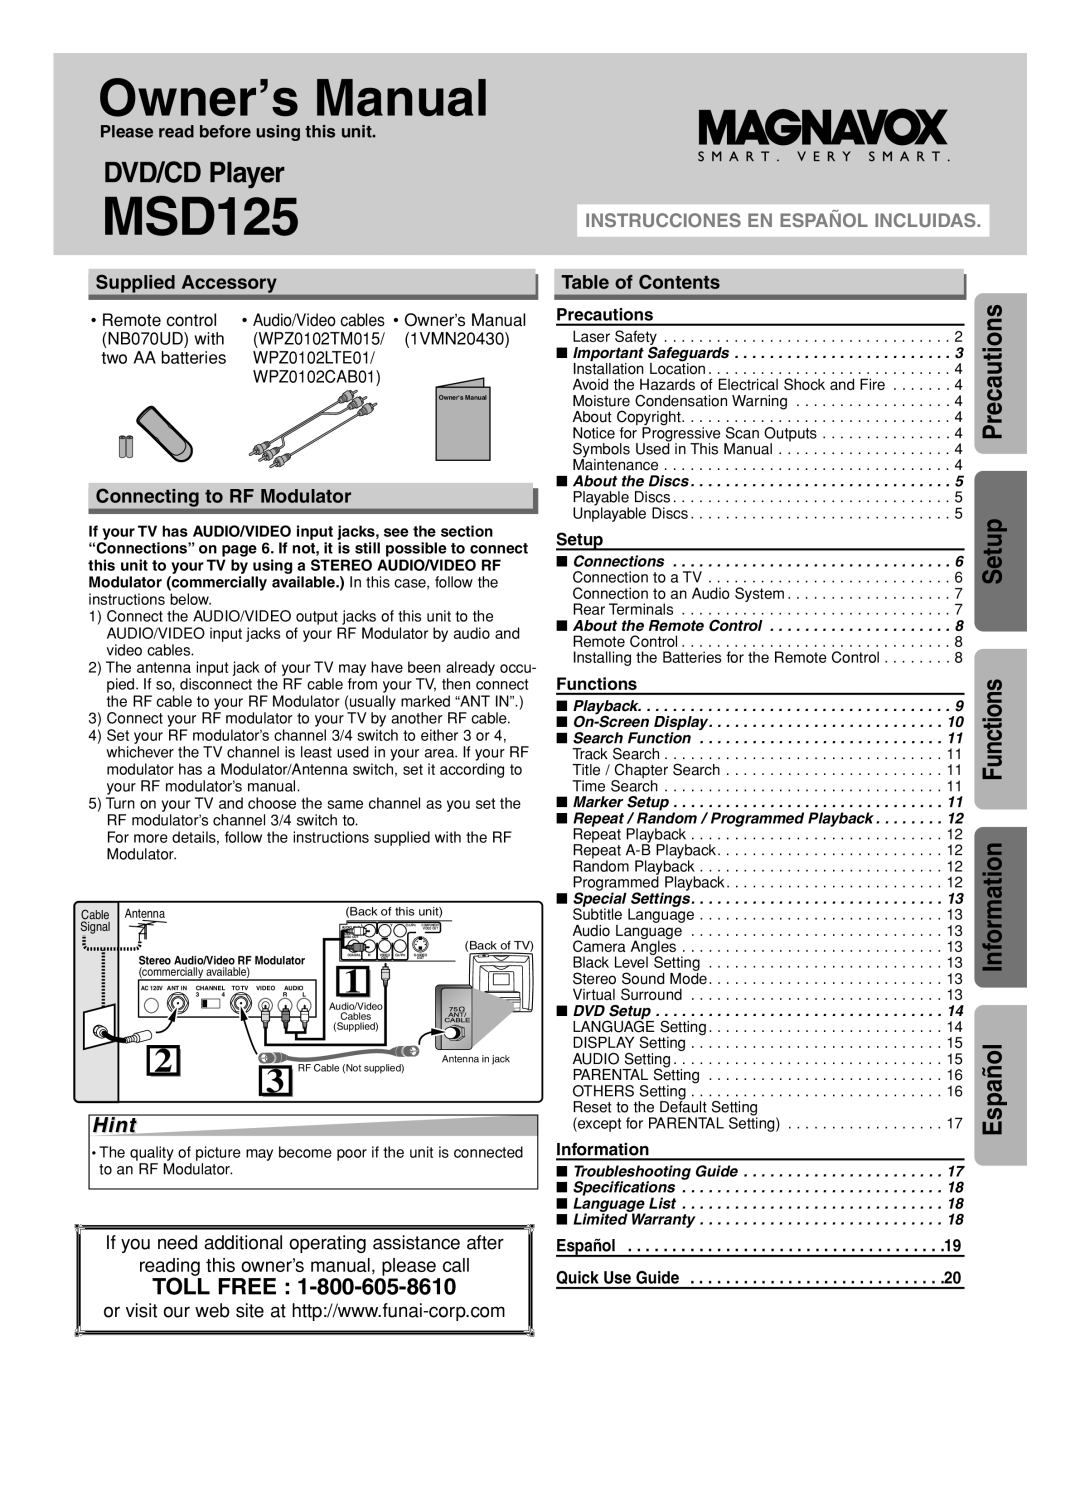 FUNAI MSD125 owner manual Precautions, Setup, Information, Español, Toll Free, Functions, Owner’s Manual, DVD/CD Player 